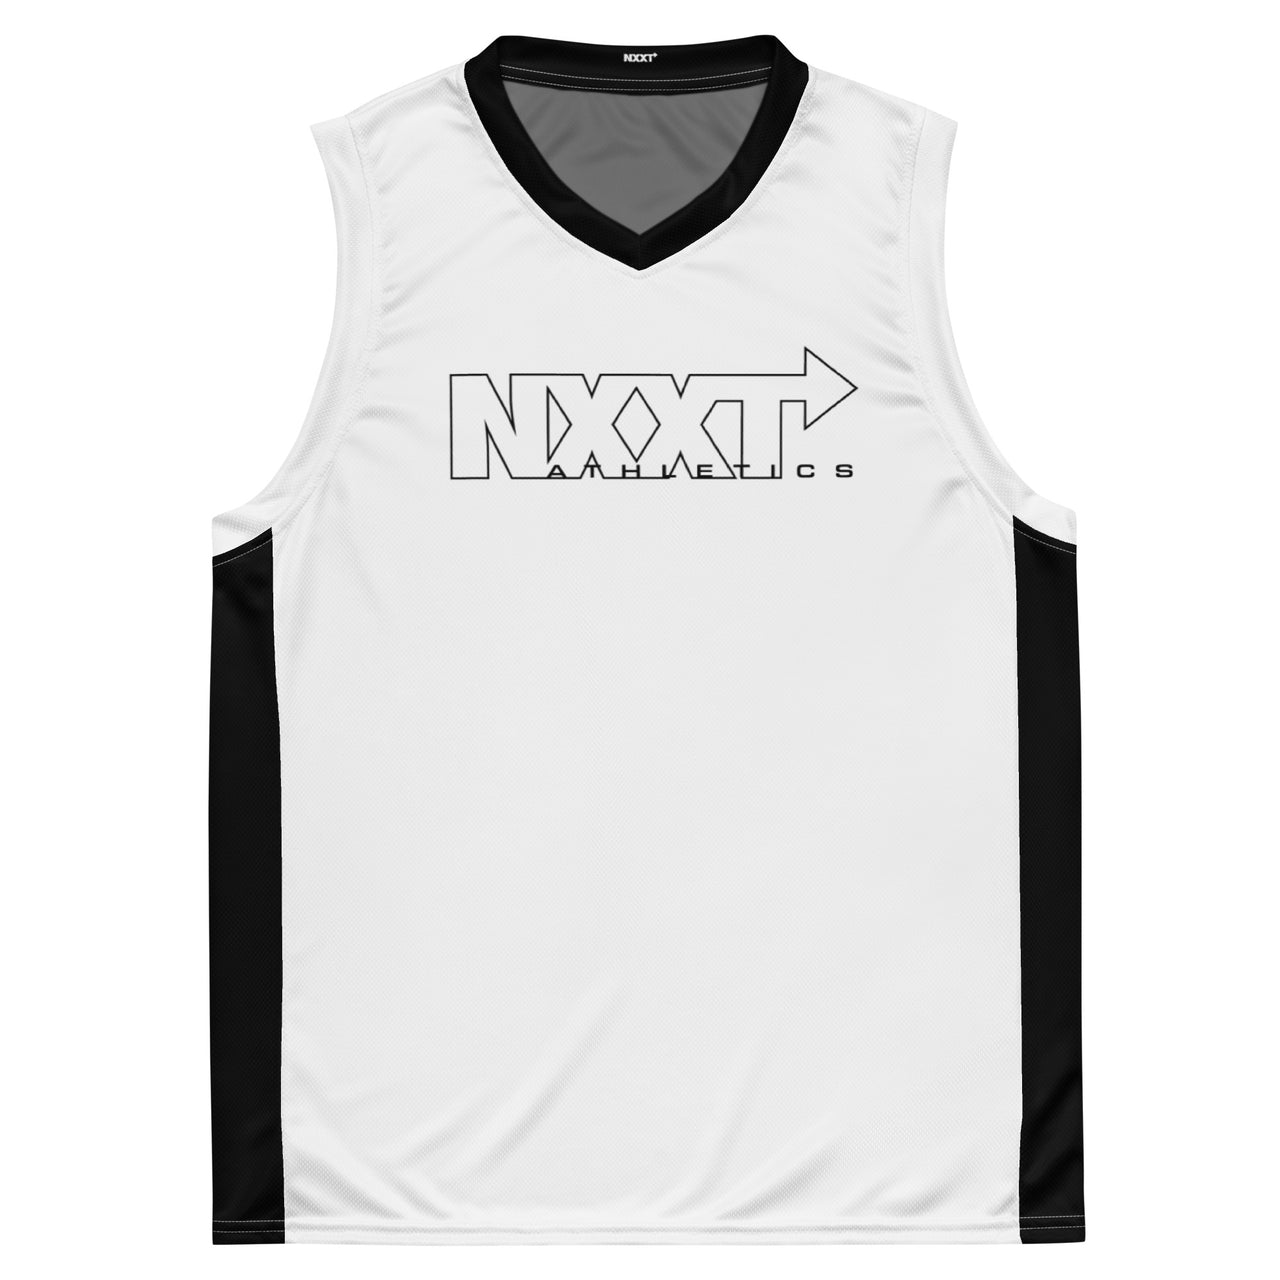 NXXT Athletics V.XXIII Recycled unisex basketball jersey - Shady Lion Coffee Co.